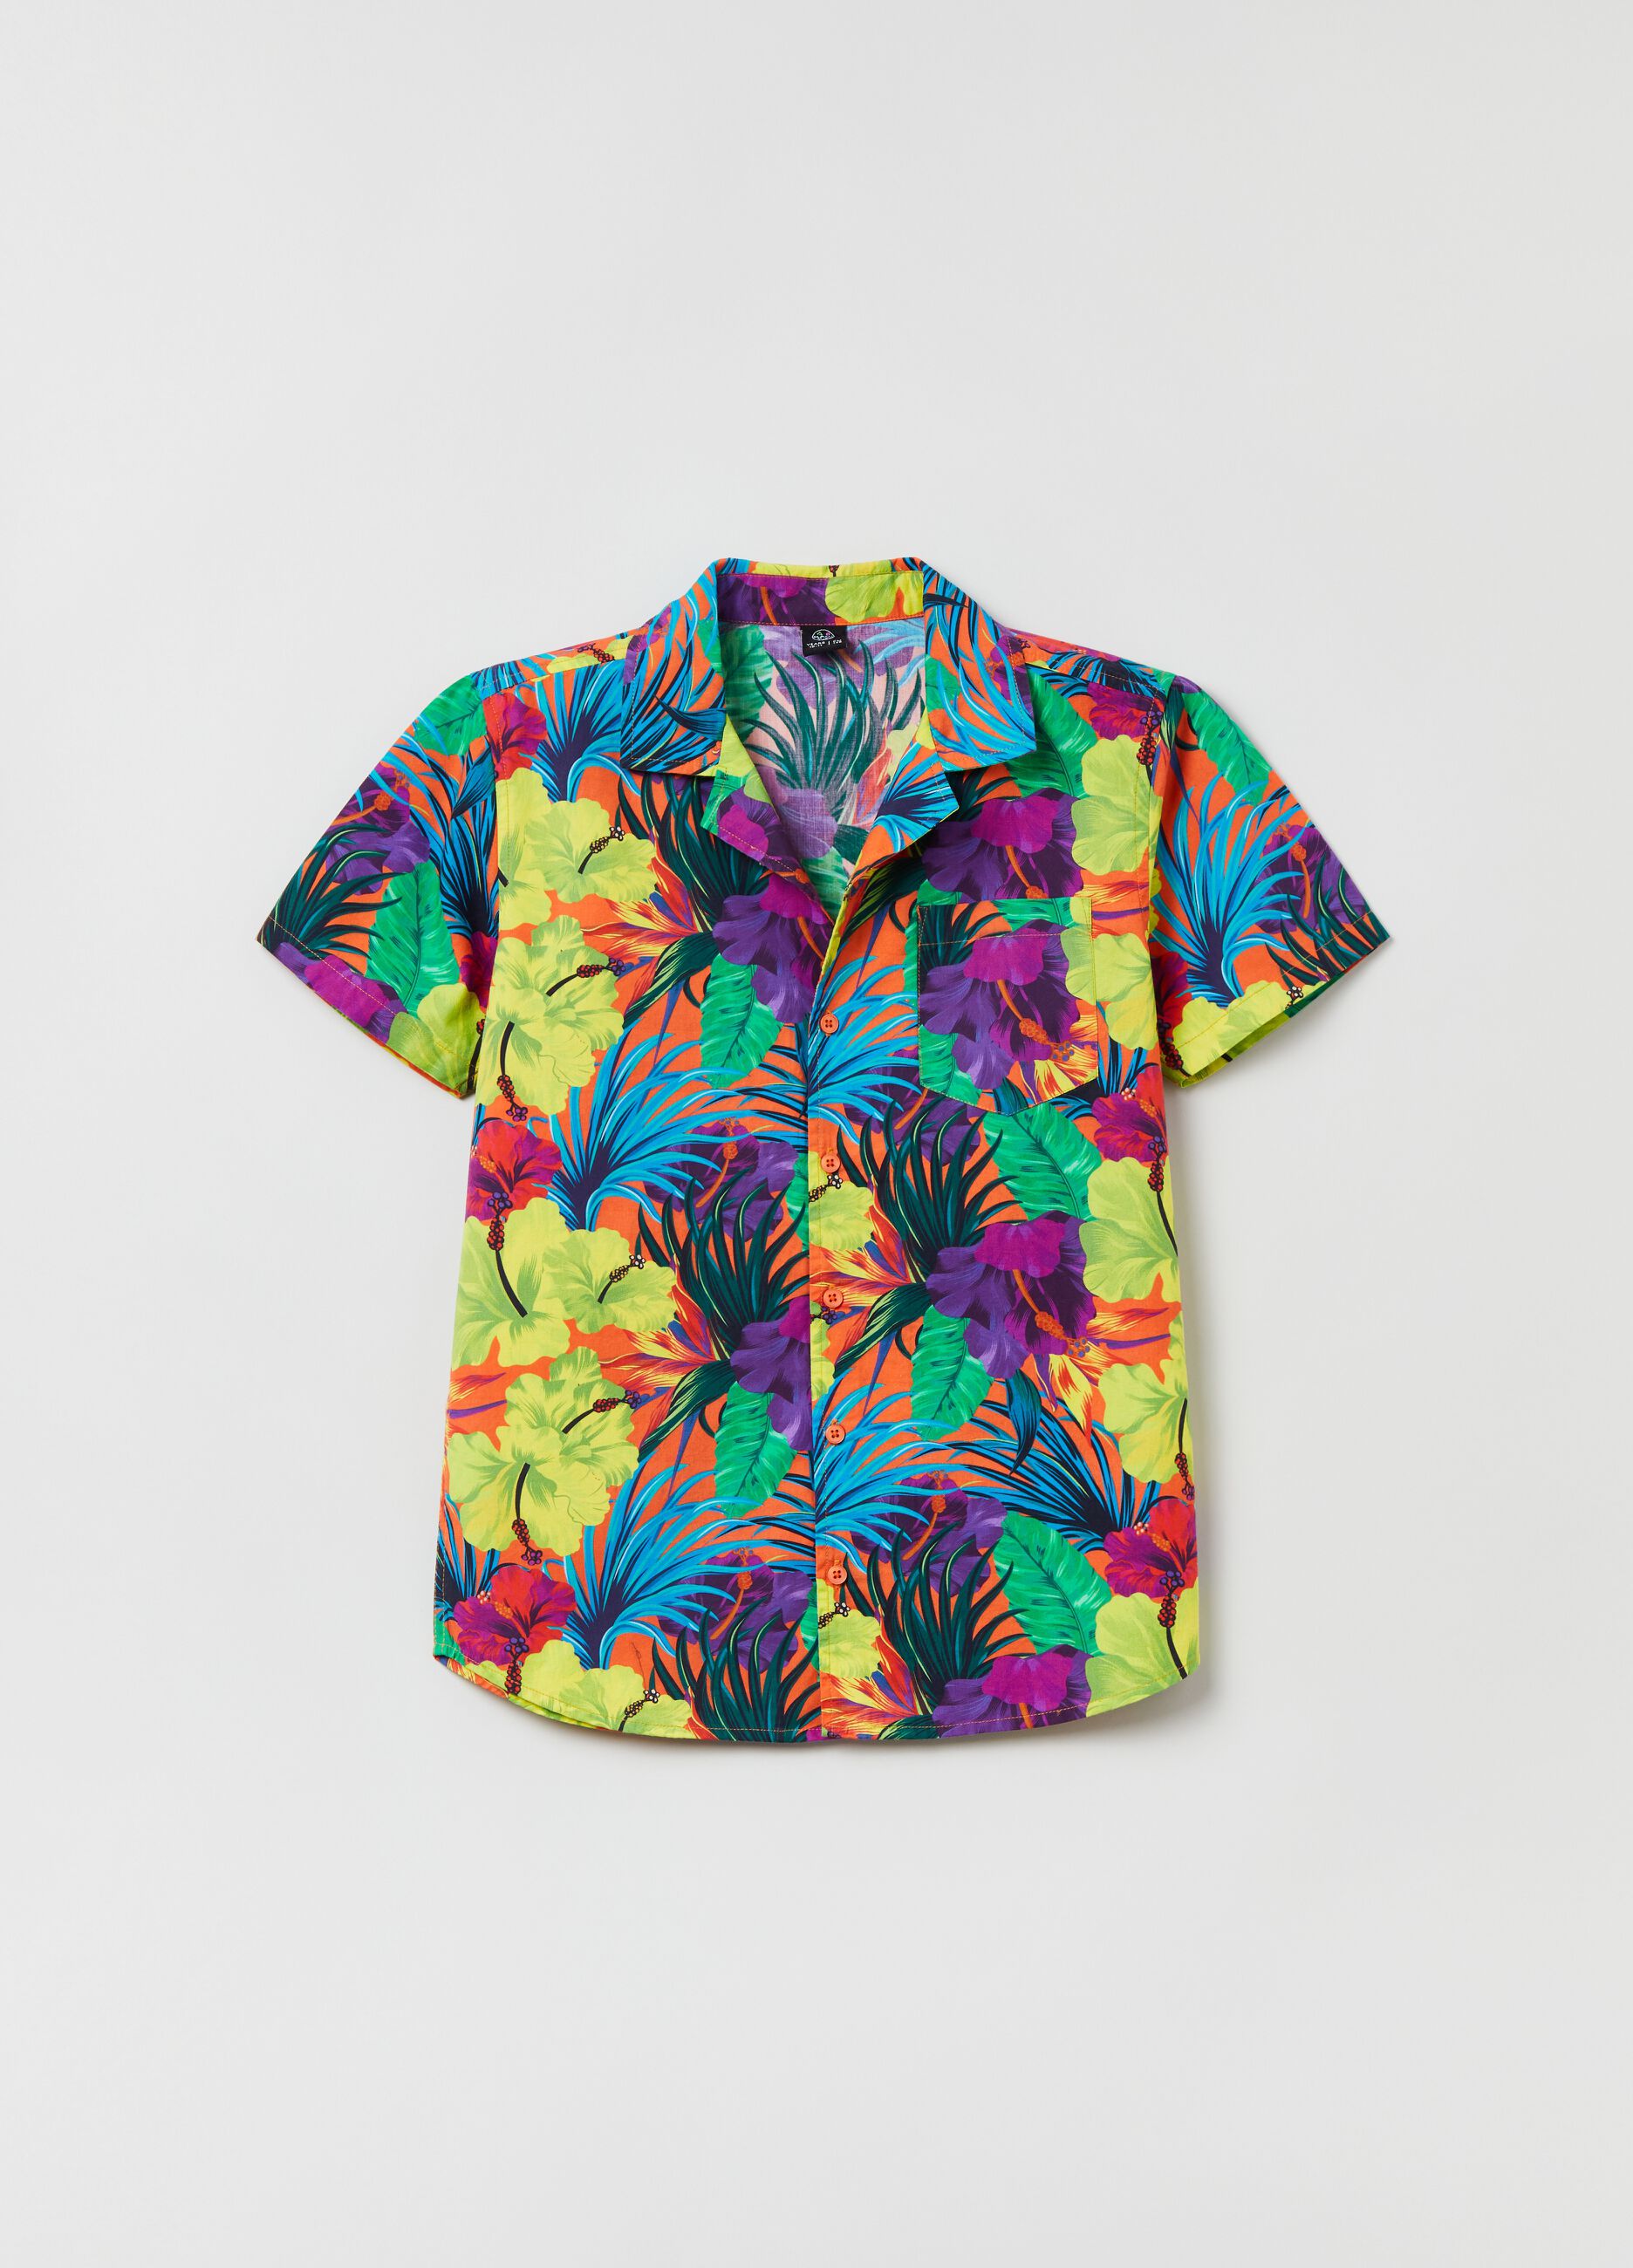 Maui and Sons cotton shirt